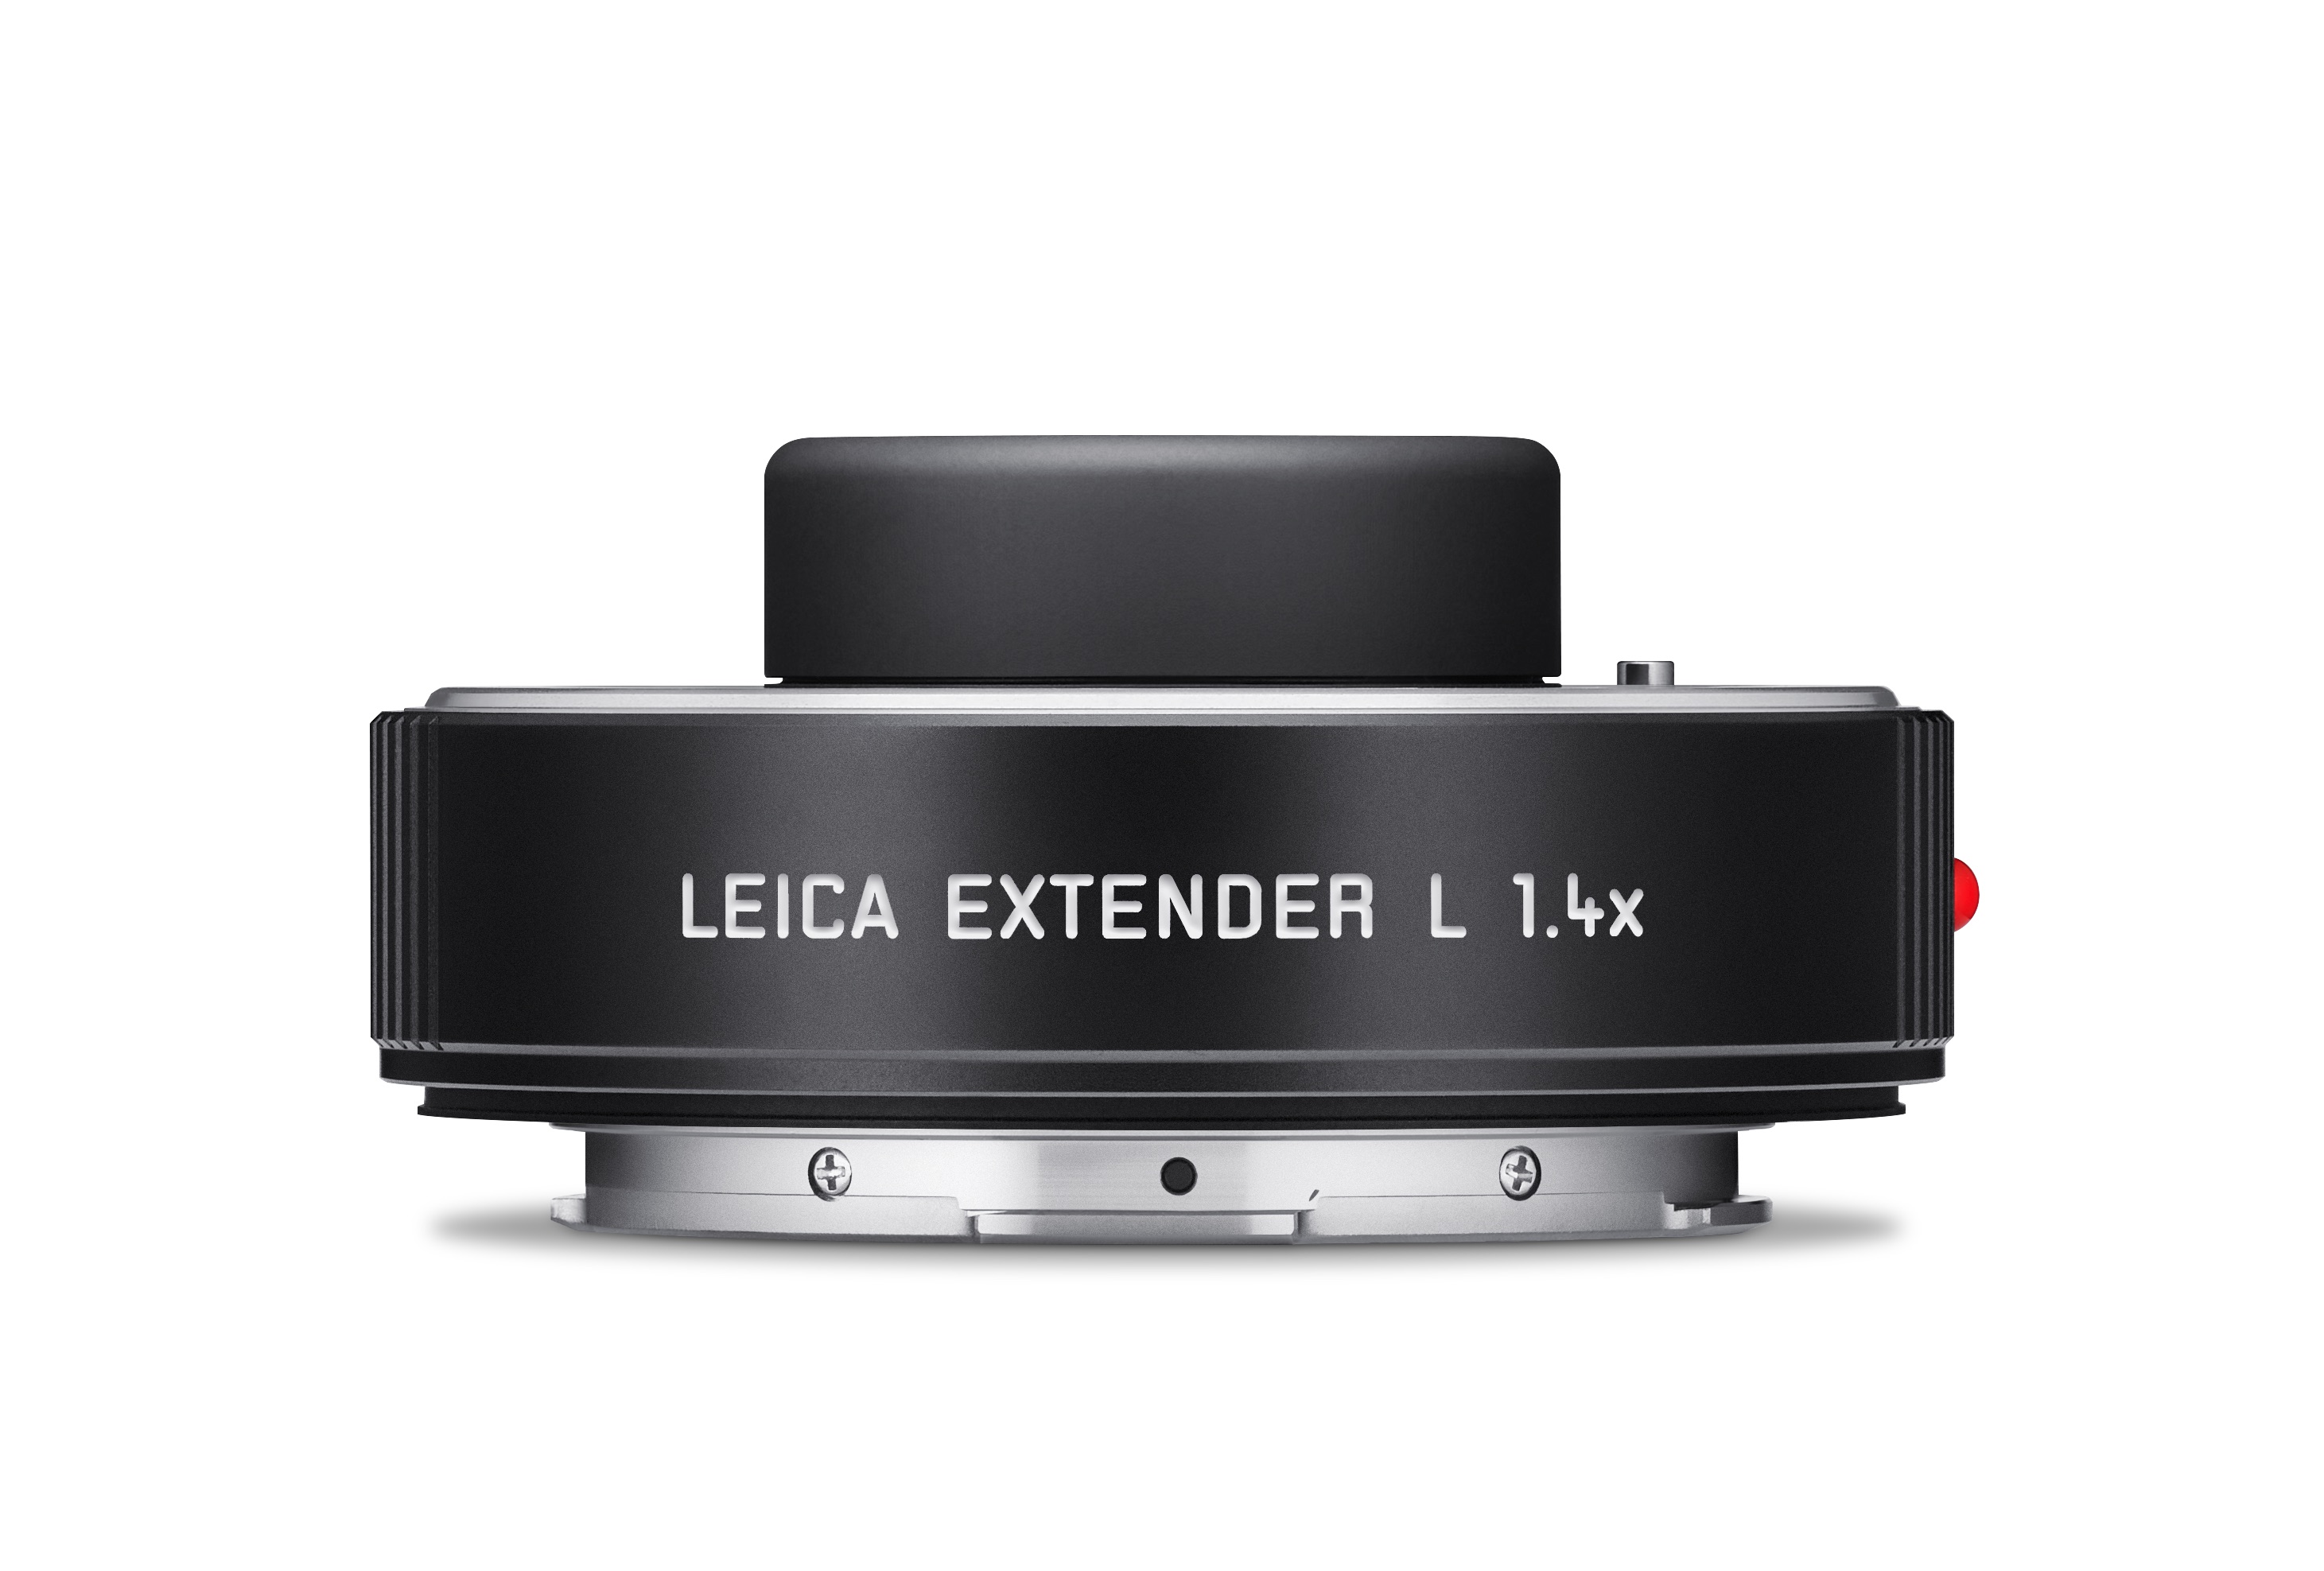 Leica Extender L 1.4x Frontal